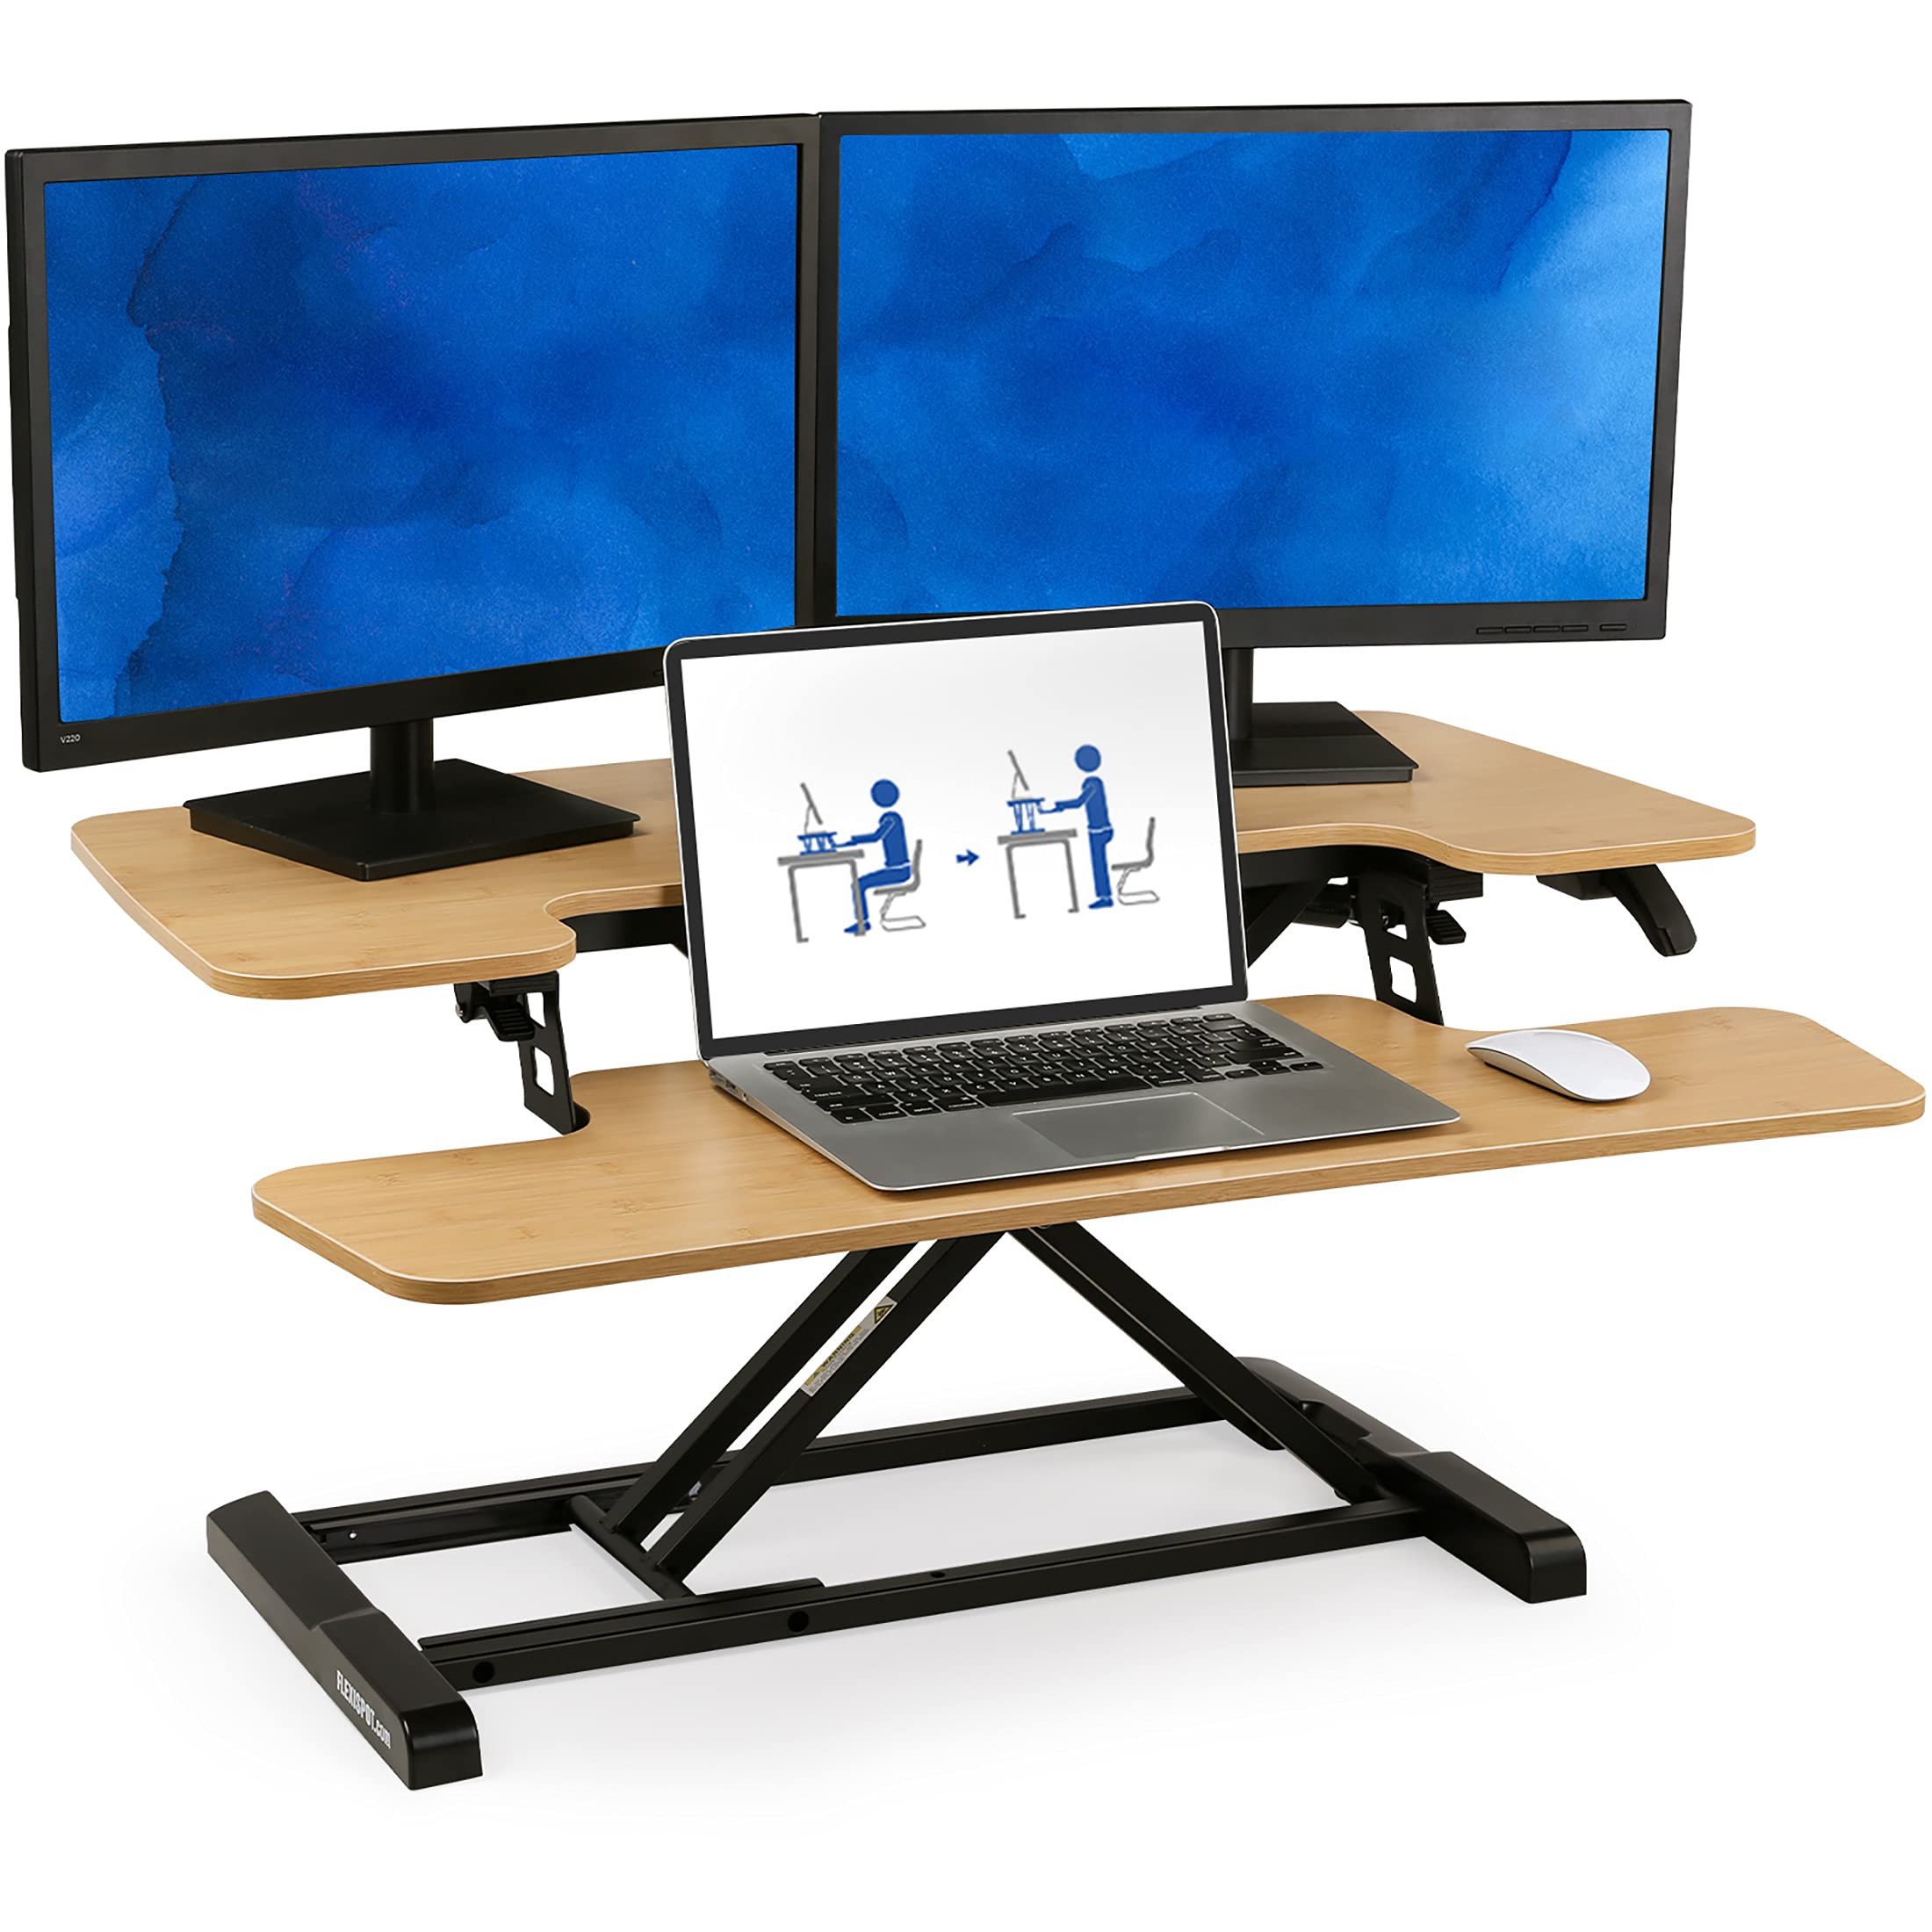 FLEXISPOT Standing Desk Converter 35" Height Adjustable Stand Up Desk Riser, Bamboo Texture Home Office Desk Workstation with Deep Keyboard Tra...